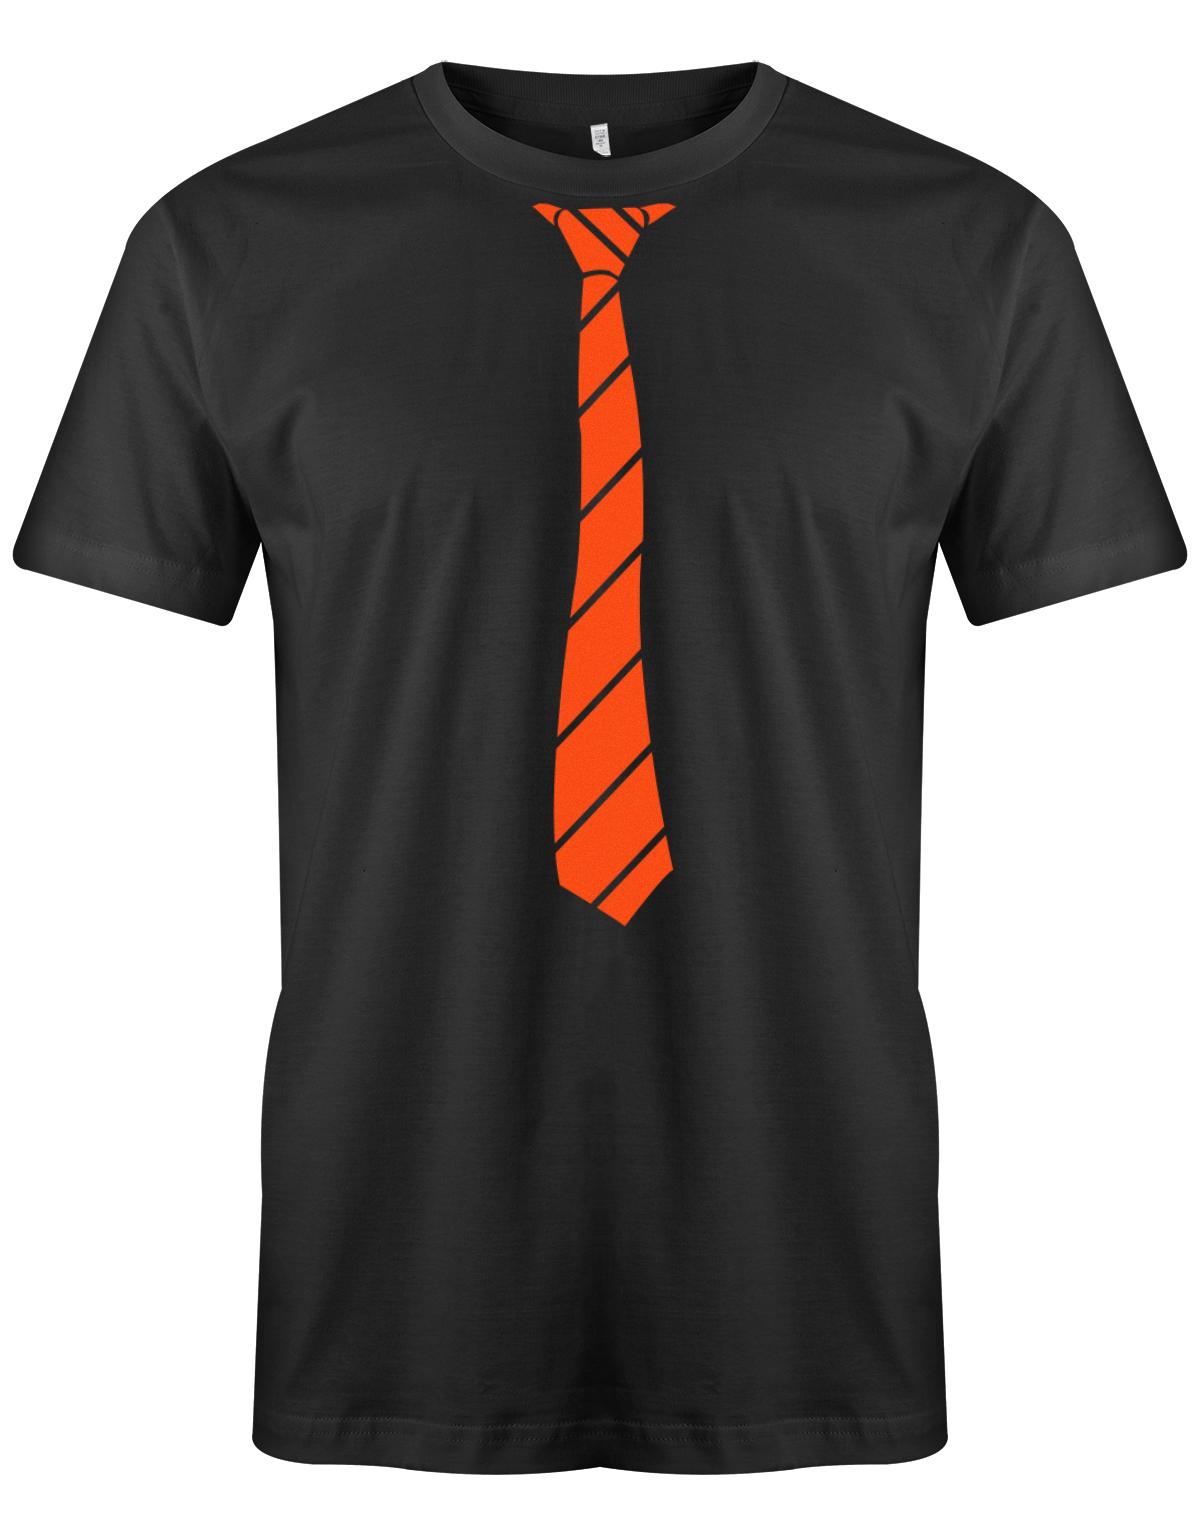 Krawatte-buisness-Herren-Shirt-JGA-Schwarz-Orange